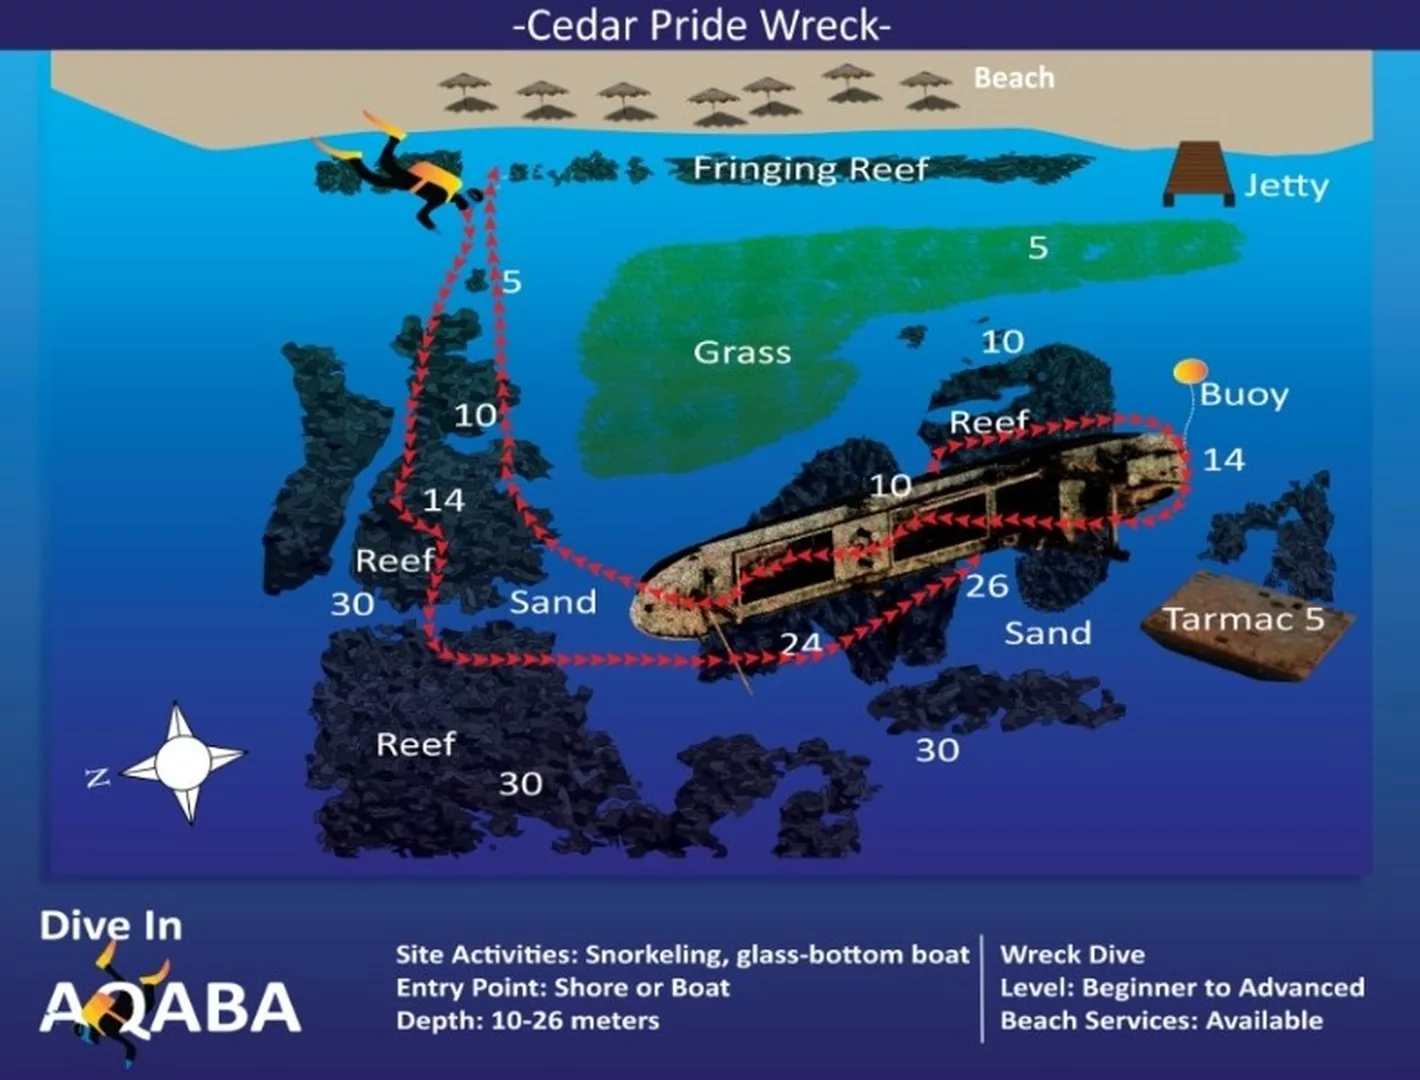 Aqaba Shipwreck Cider Pride Map